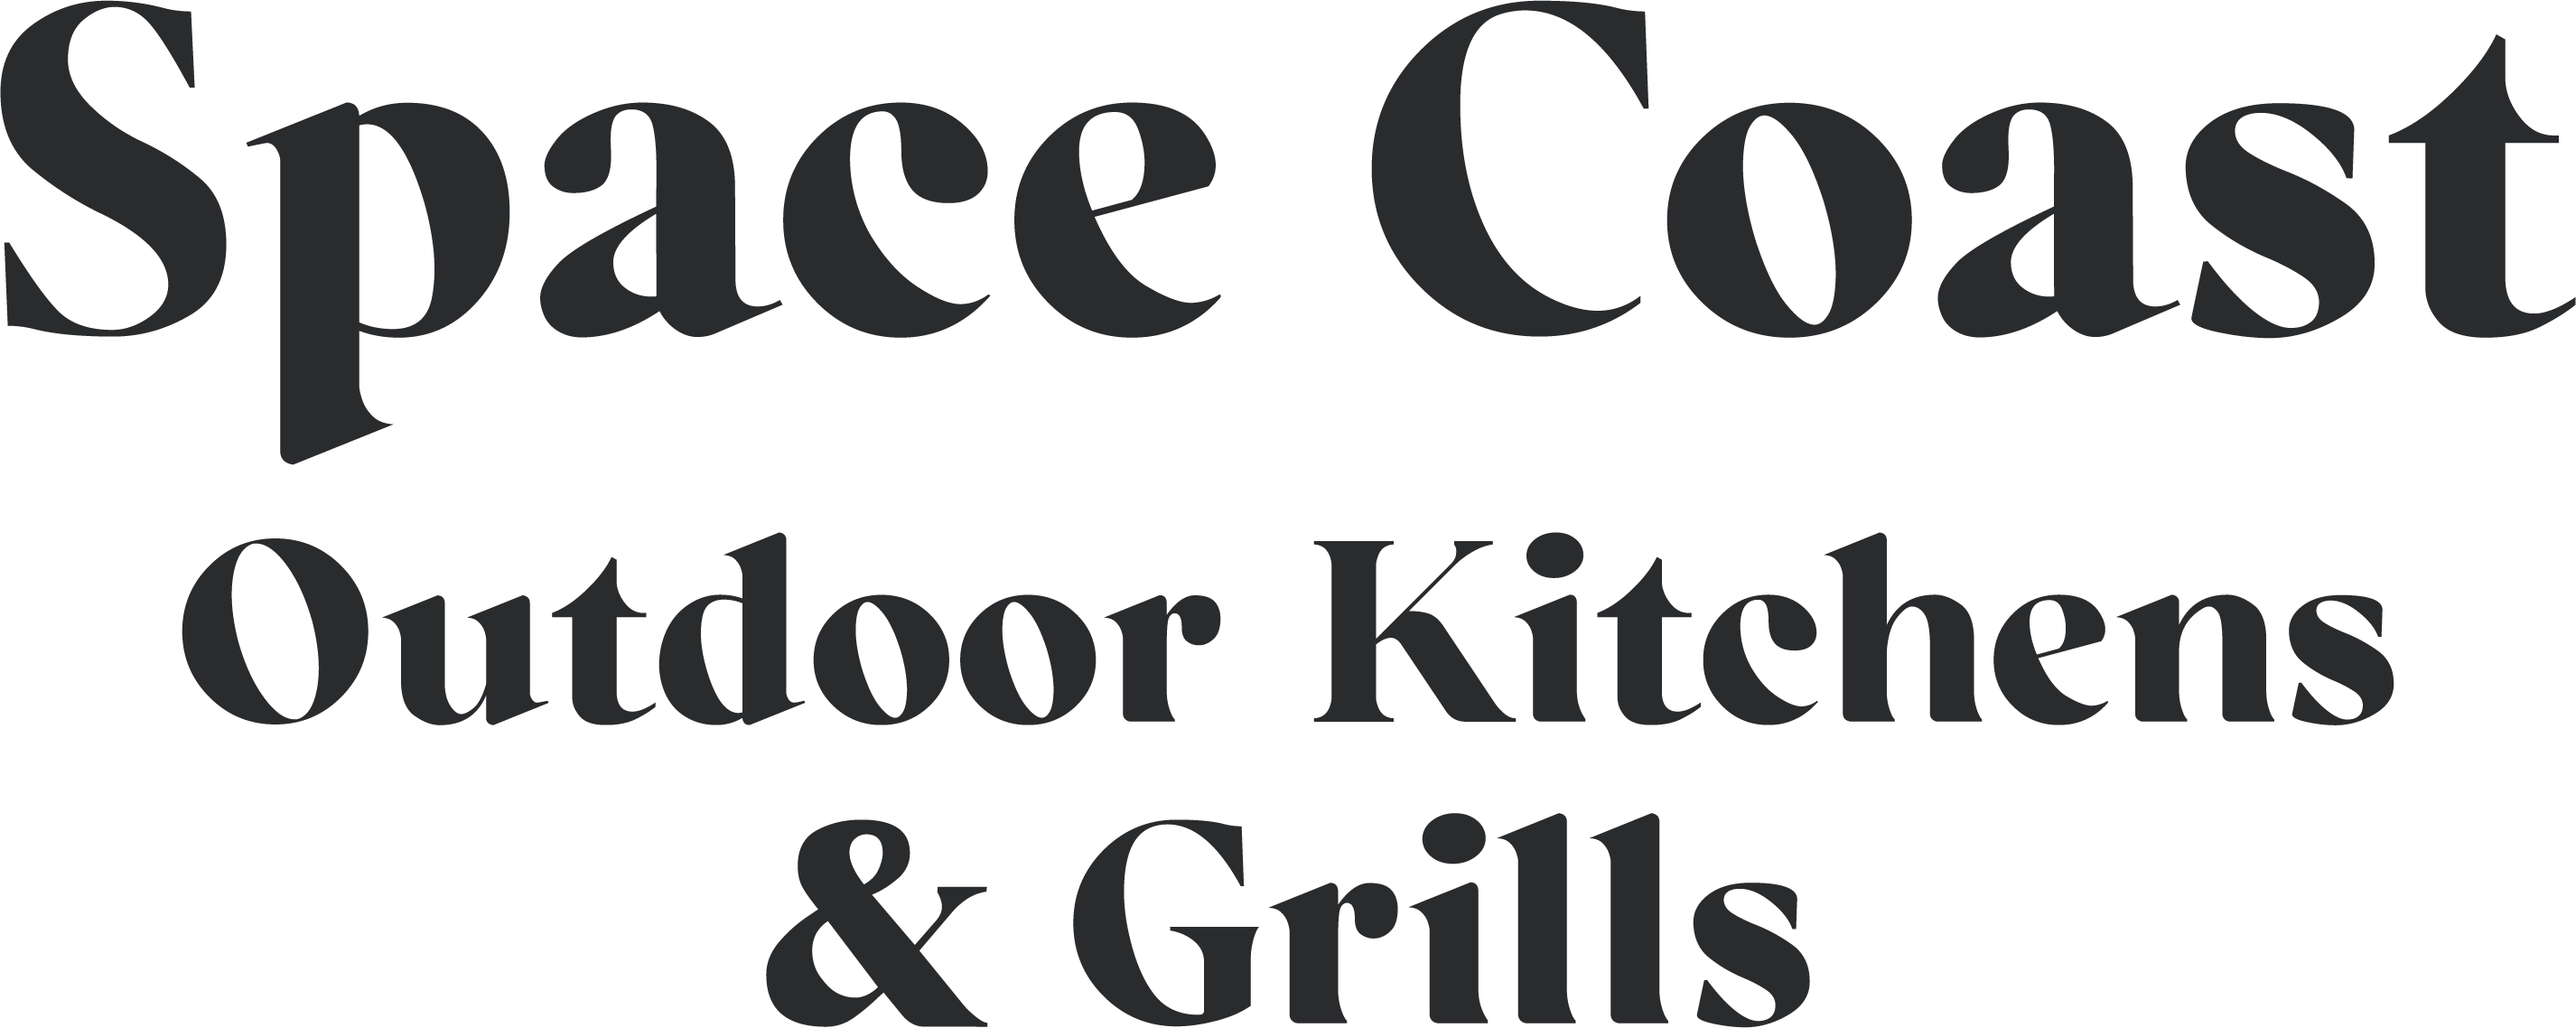 Spacecoast Outdoor Kitchens logo